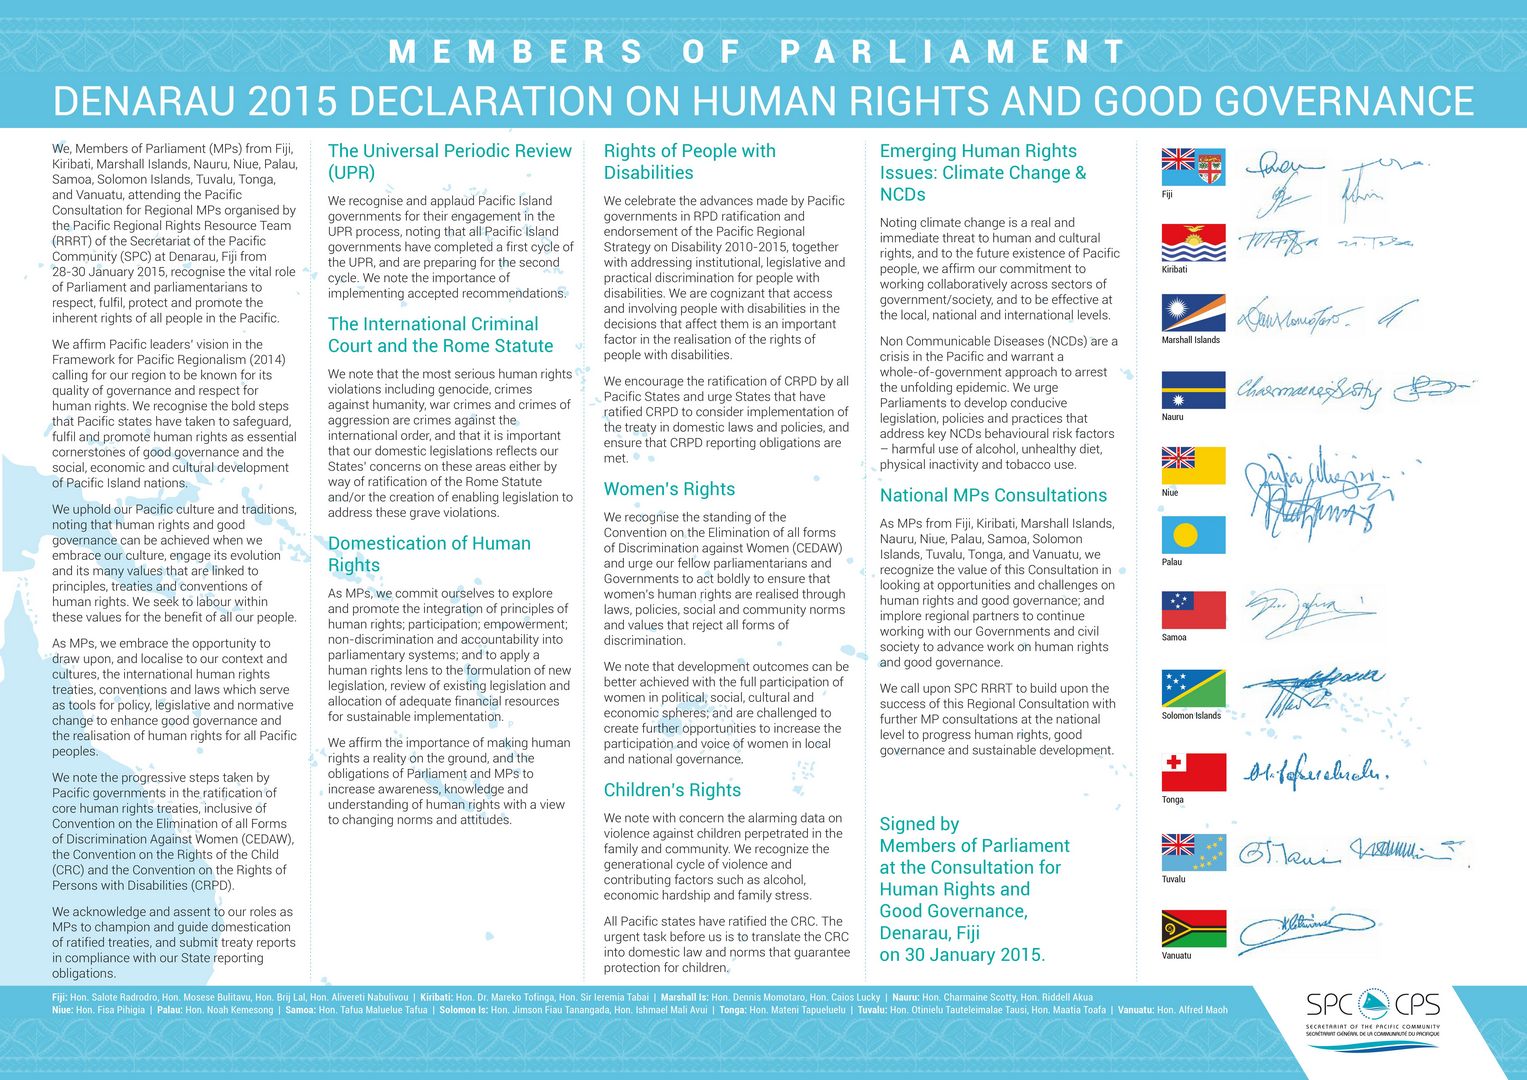 Kiribati Parliament endorses Pacific declaration on human rights for good governance